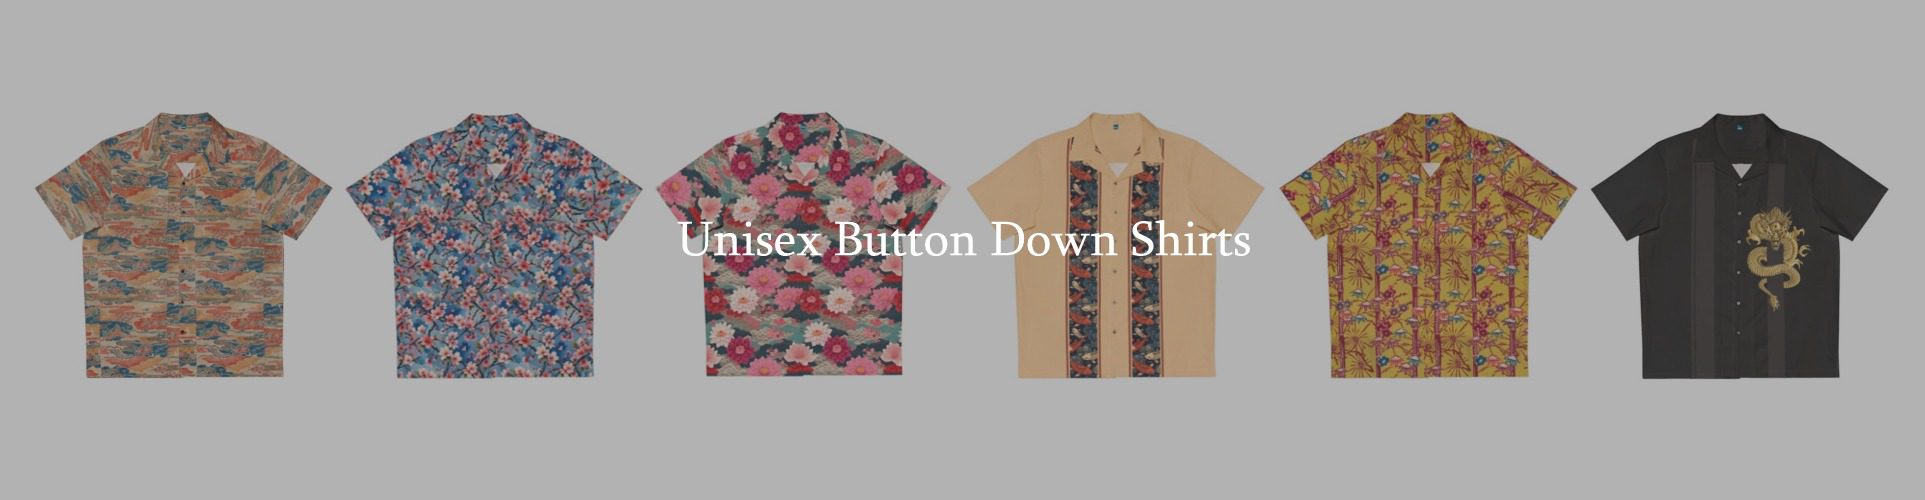 Unisex Button Down Shirts